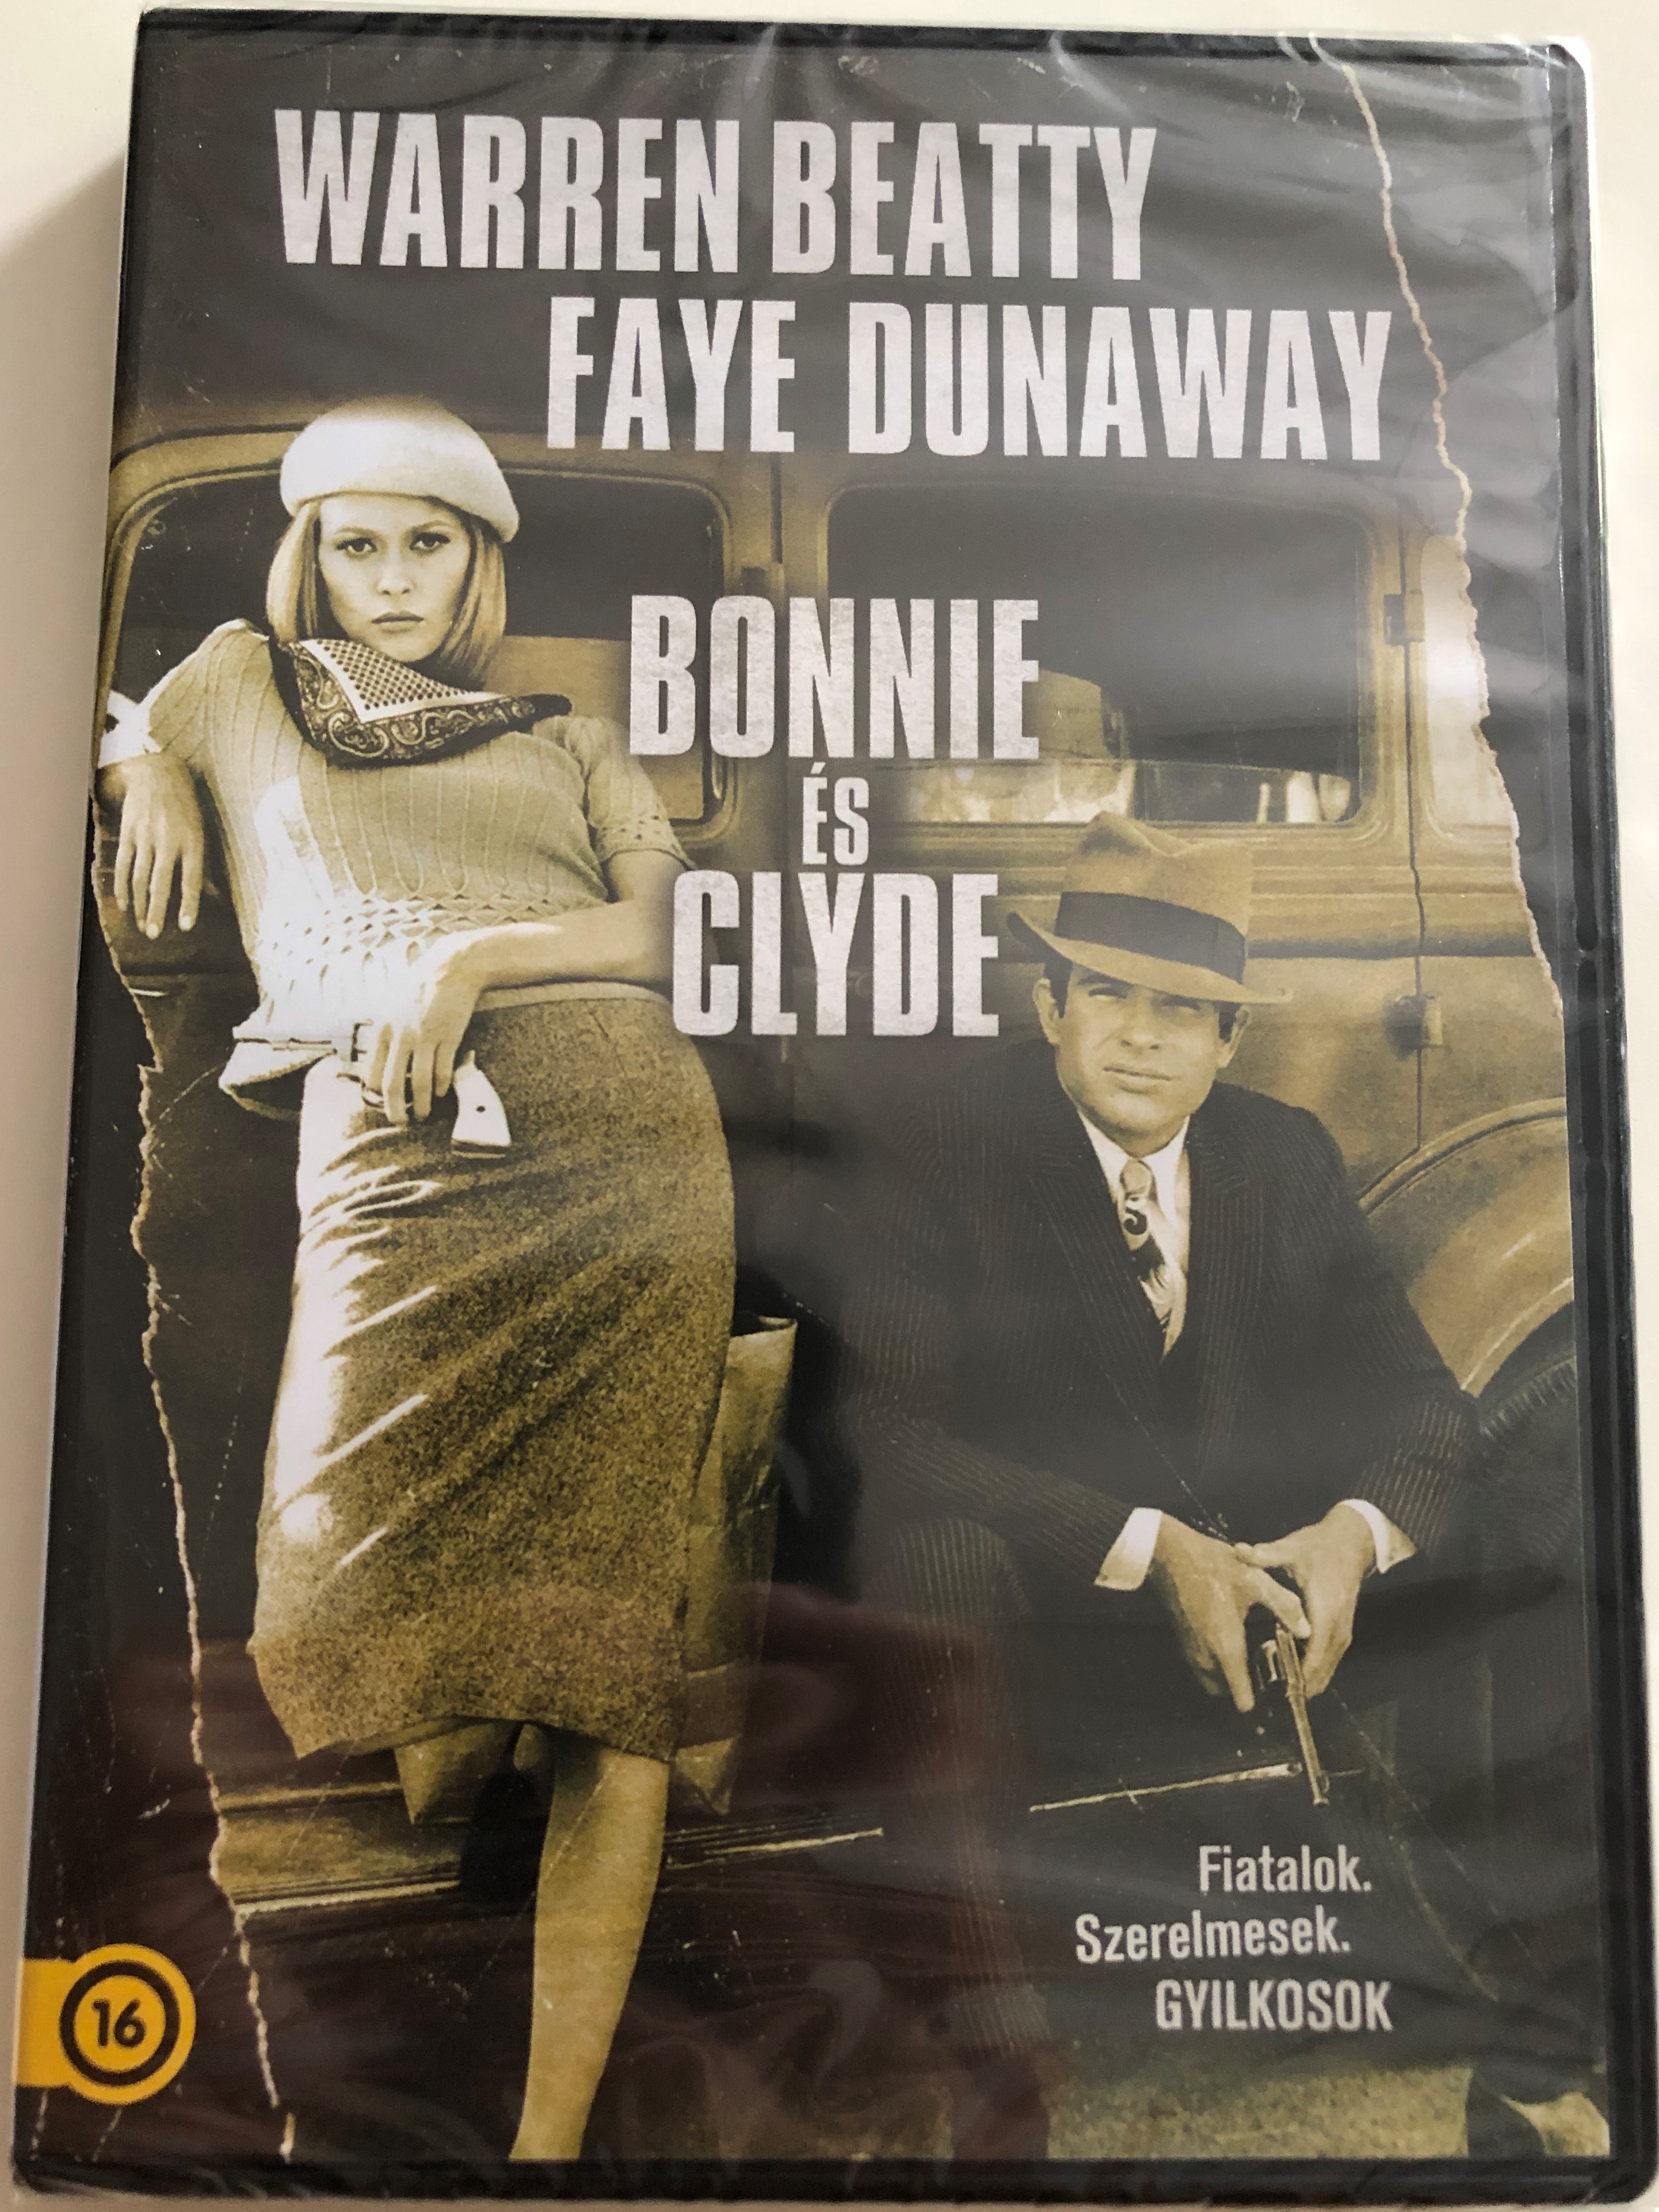 bonnie-clyde-dvd-1967-bonnie-s-clyde-fiatalok.-szerelmesek.-gyilkosok-directed-by-arthur-penn-starring-warren-beatty-faye-dunaway-michael-j.-pollard-gene-hackman-estelle-parsons-1-.jpg